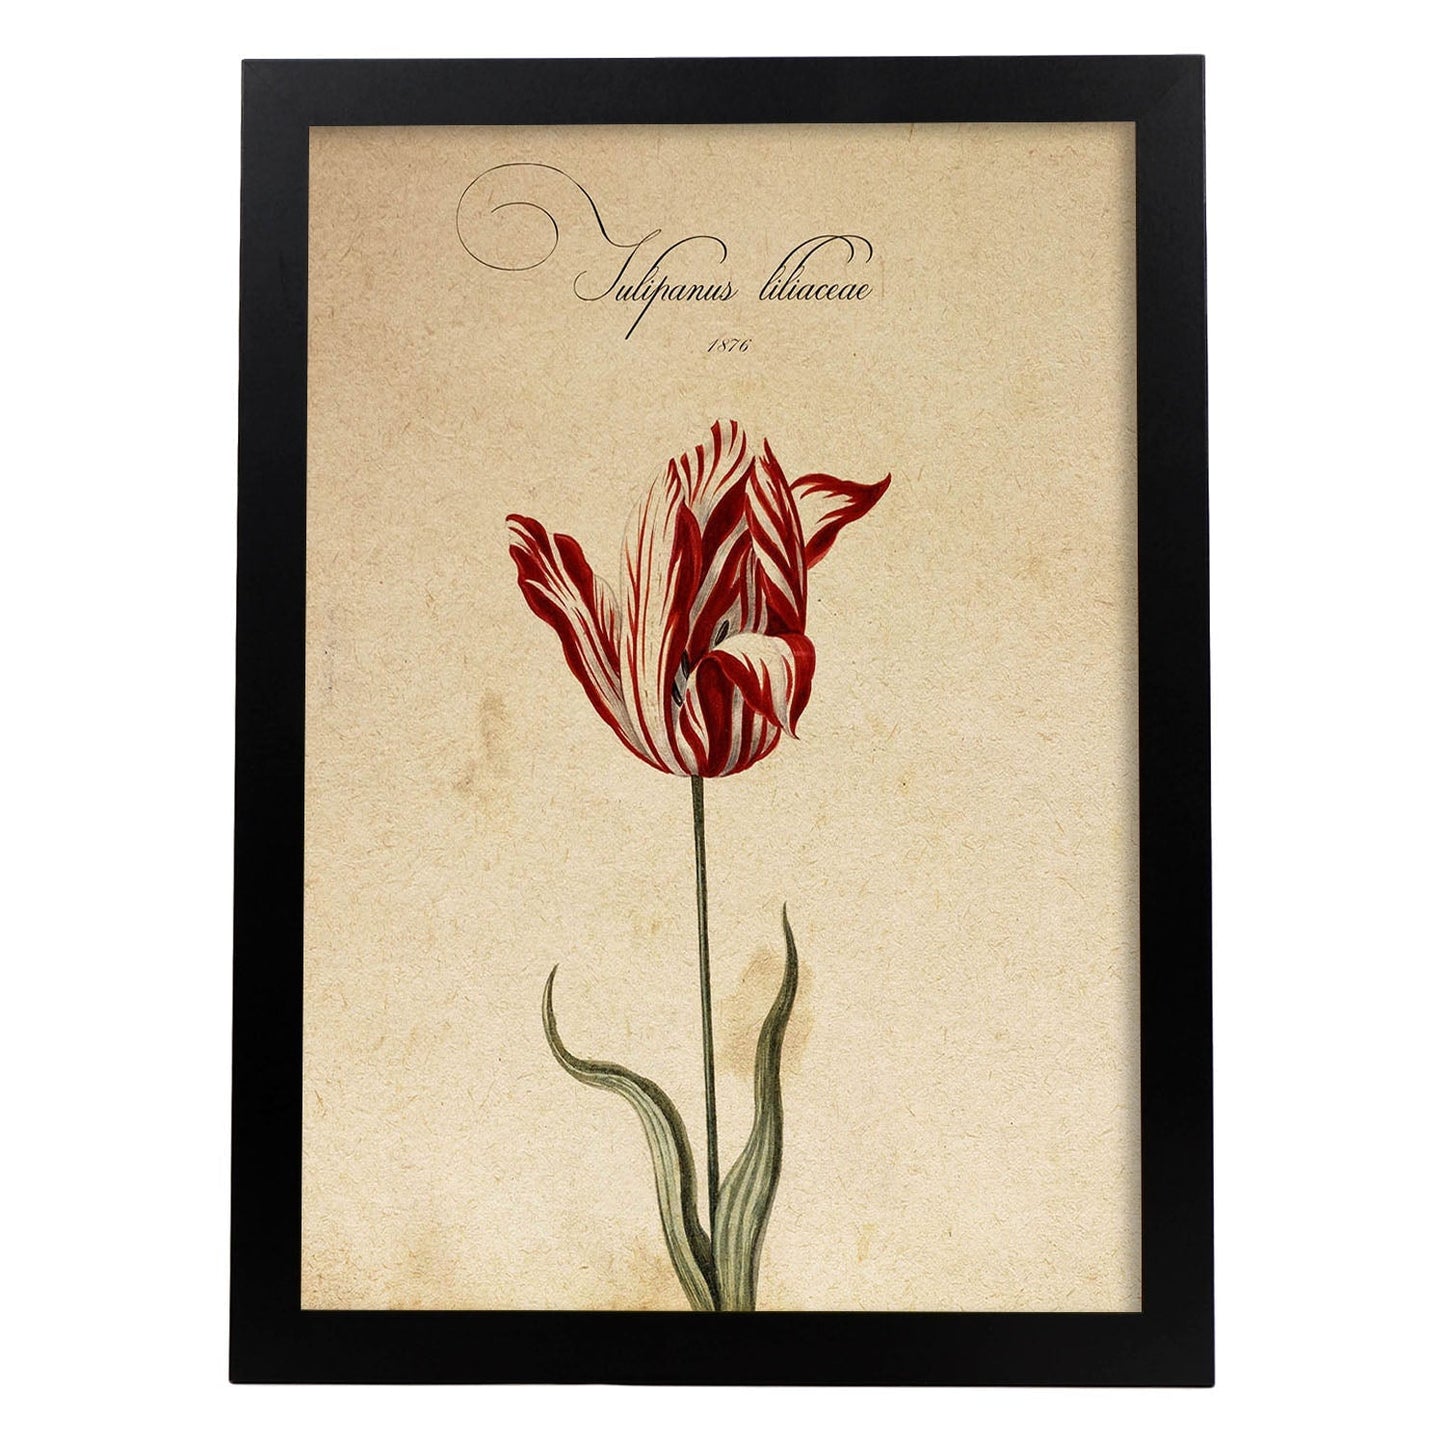 Poster de flores vintage. Lámina Liliaceae tulip2 con diseño vintage.-Artwork-Nacnic-A4-Marco Negro-Nacnic Estudio SL